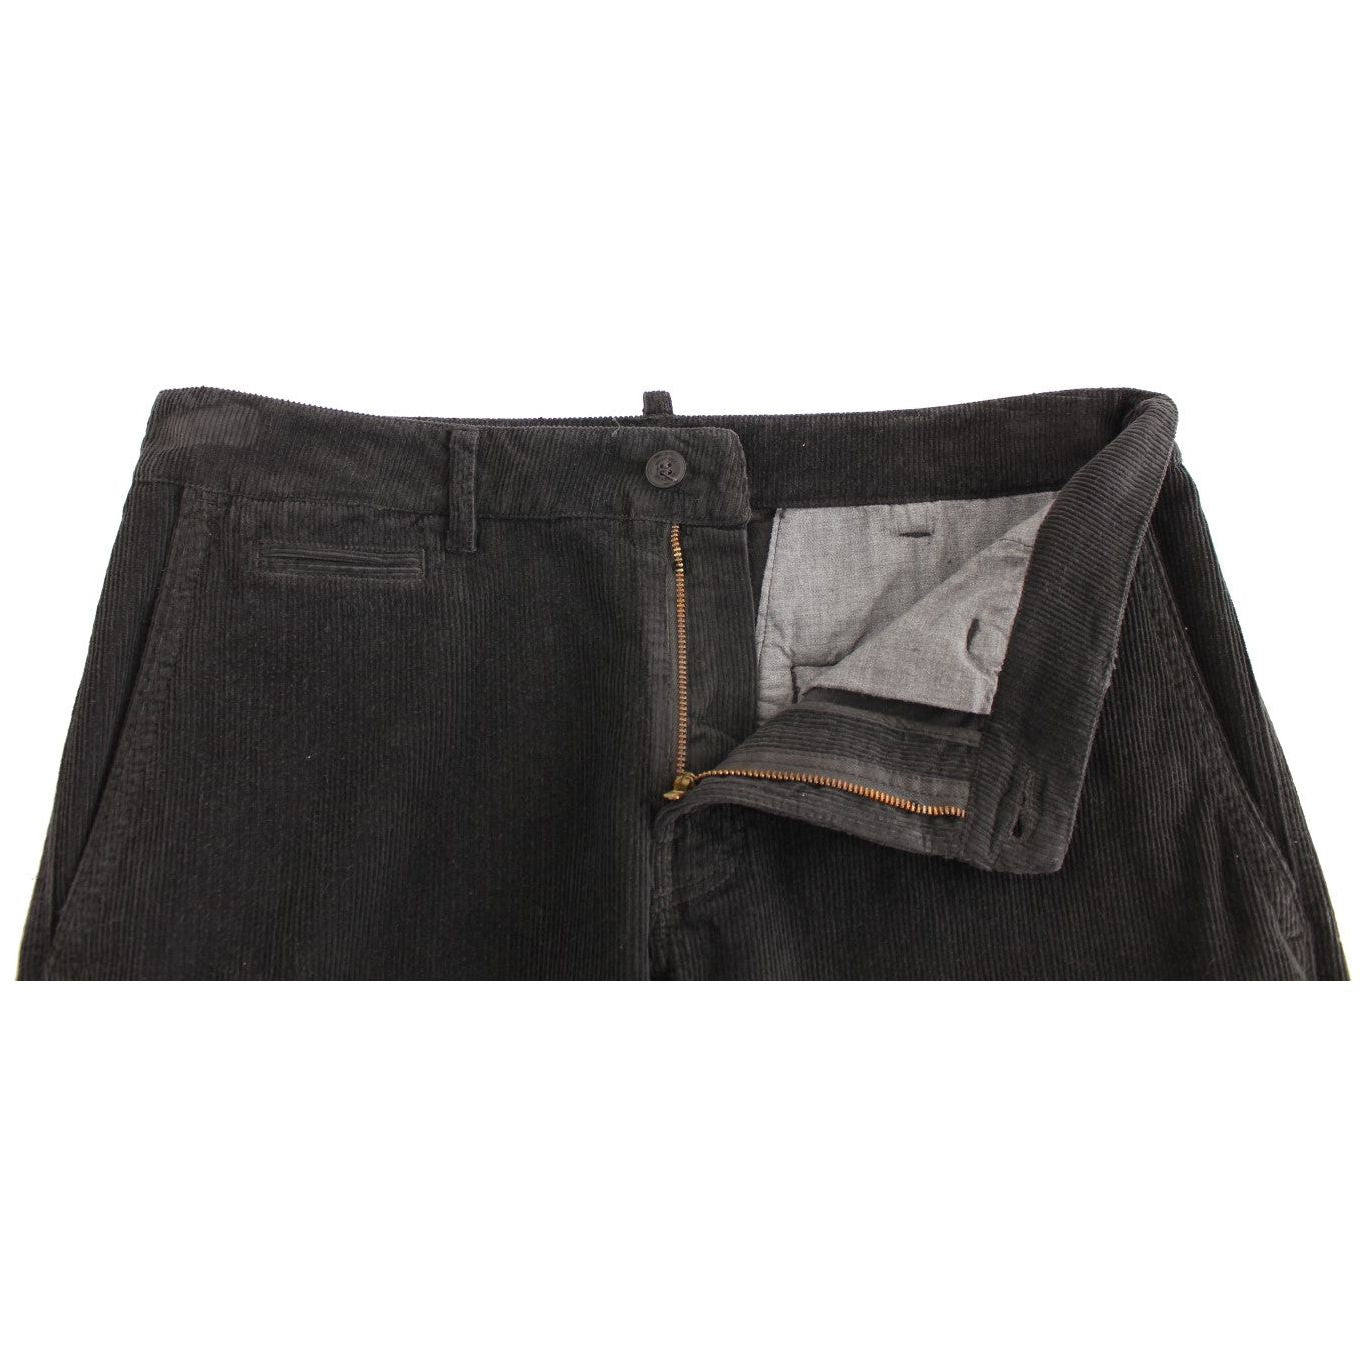 GF Ferre Elegant Black Cotton Corduroy Pants Jeans & Pants black-corduroy-cotton-straight-fit-pants 53278-black-corduroy-cotton-straight-fit-pants-4.jpg